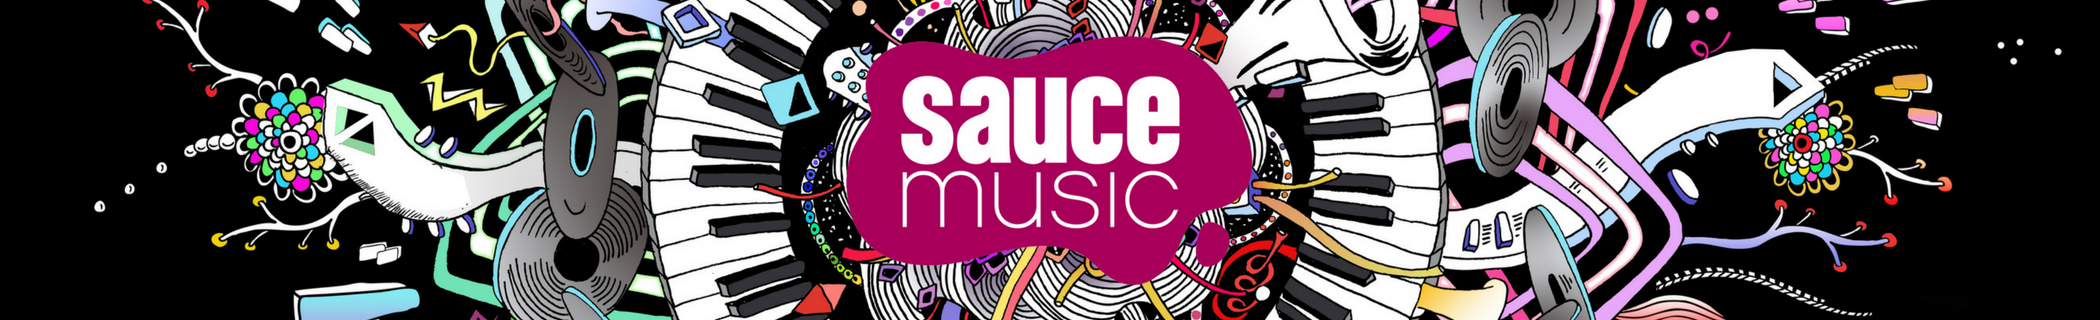 Sauce Music's profile banner